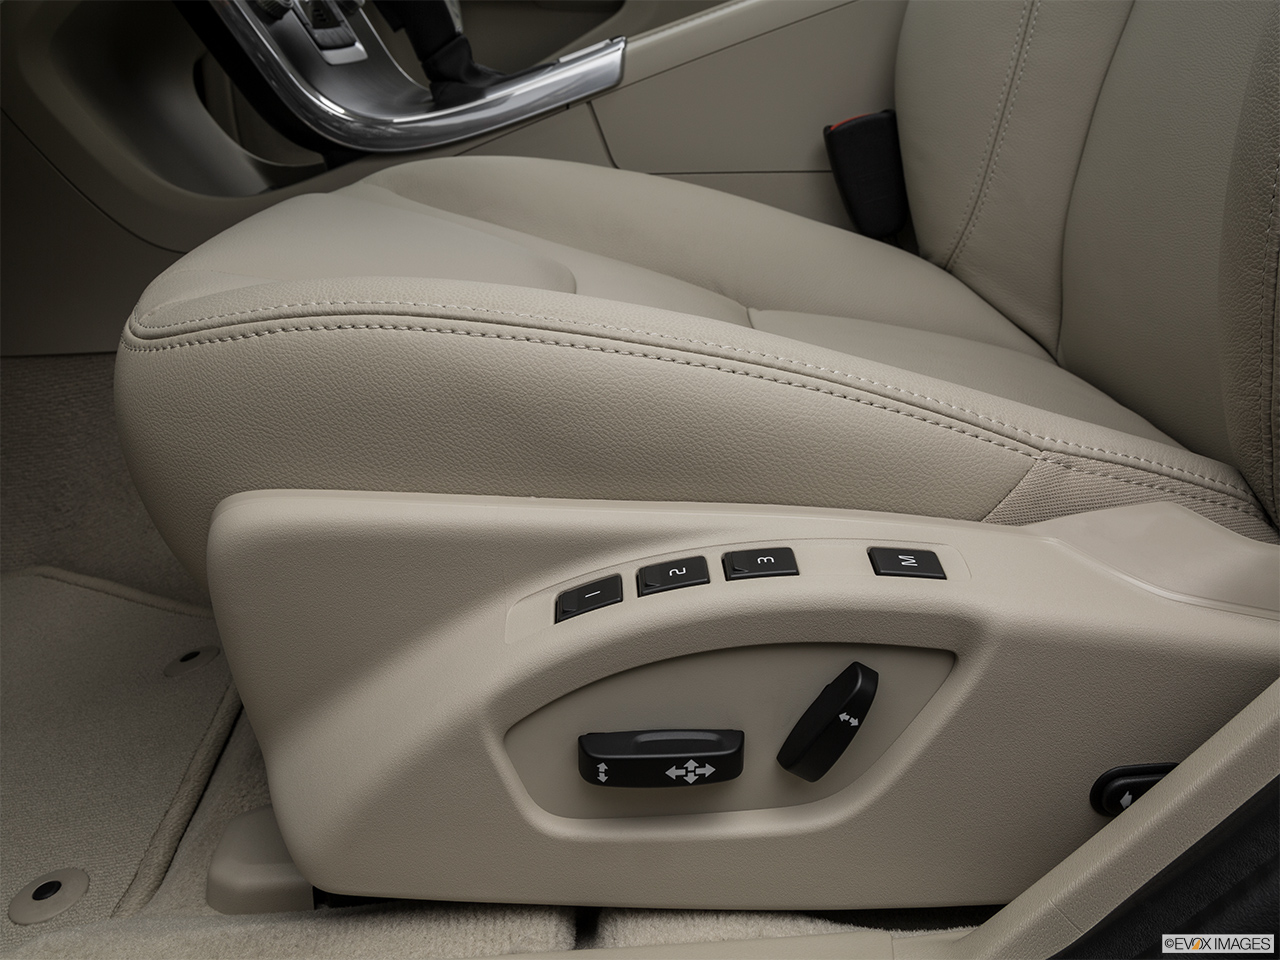 2016 Volvo S60 T5 Drive-E FWD Premier Seat Adjustment Controllers. 